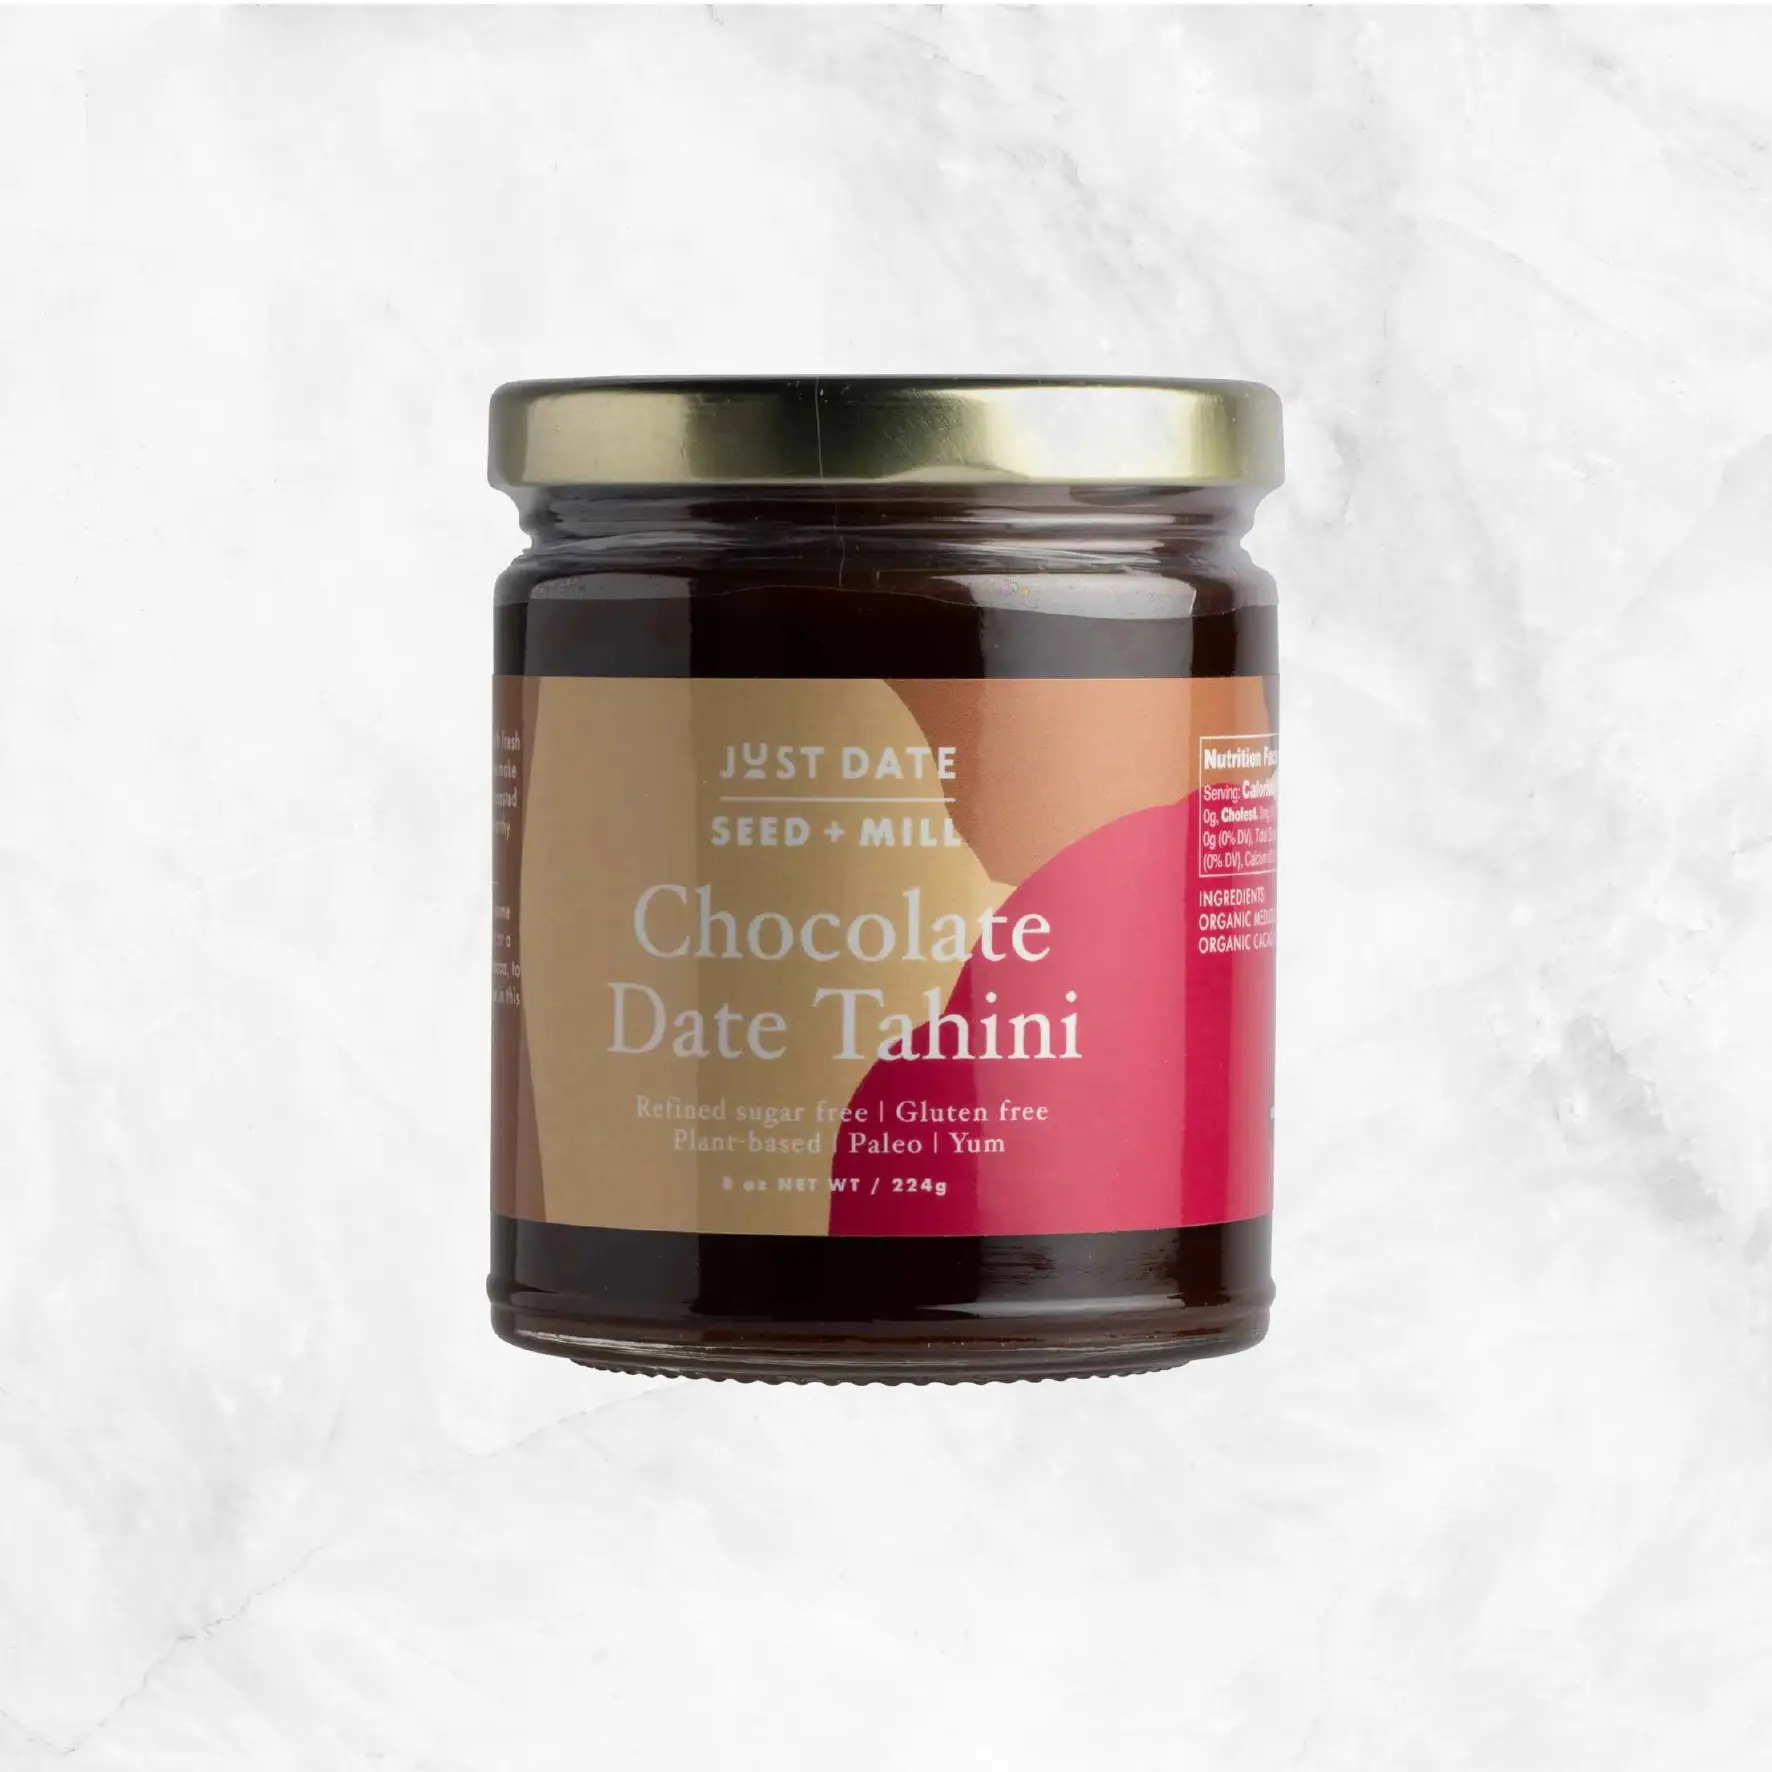 Chocolate Date Tahini Delivery